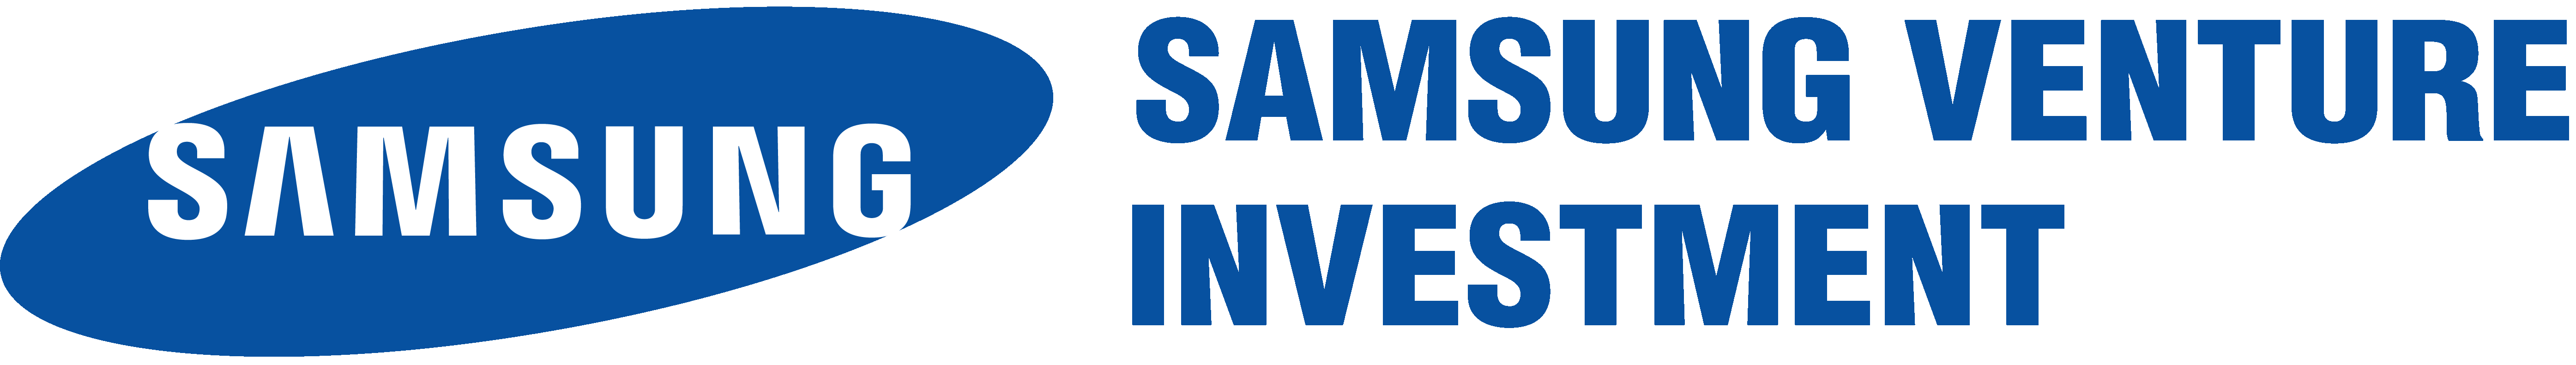 Samsung Venture Investment Corporation | Lead investor